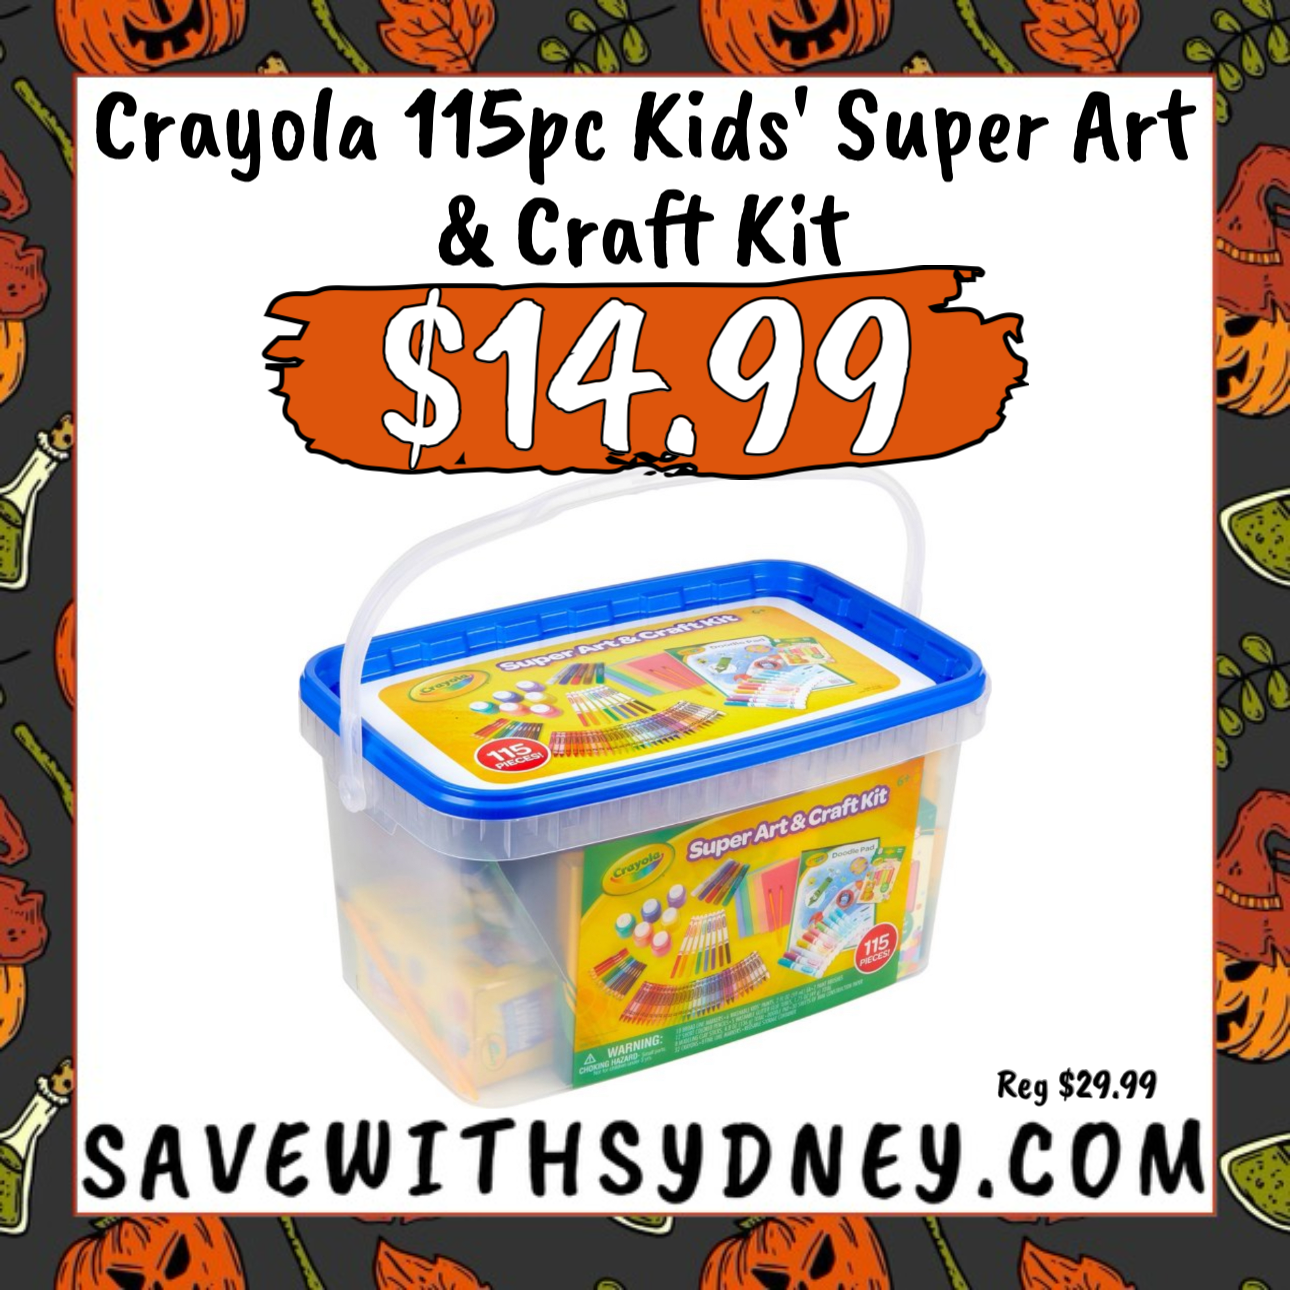 Crayola 115pc Kids' Super Art & Craft Kit $14.99 — Save with Sydney